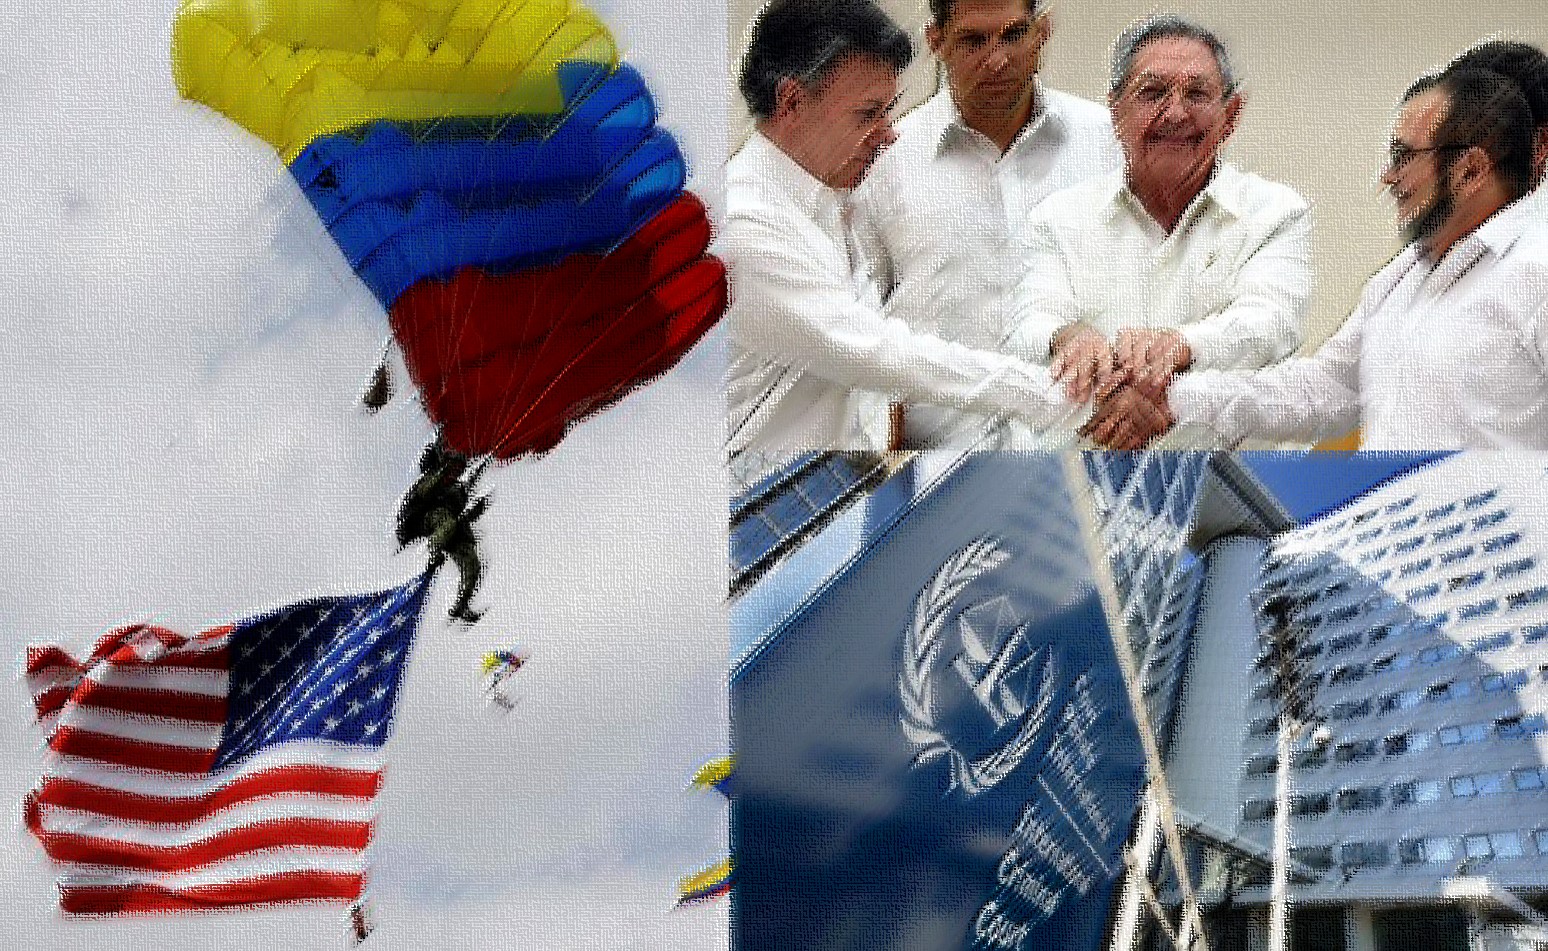 acedi-cilsa-j-huertas-us-opposition-icc-colombian-peace-process-2